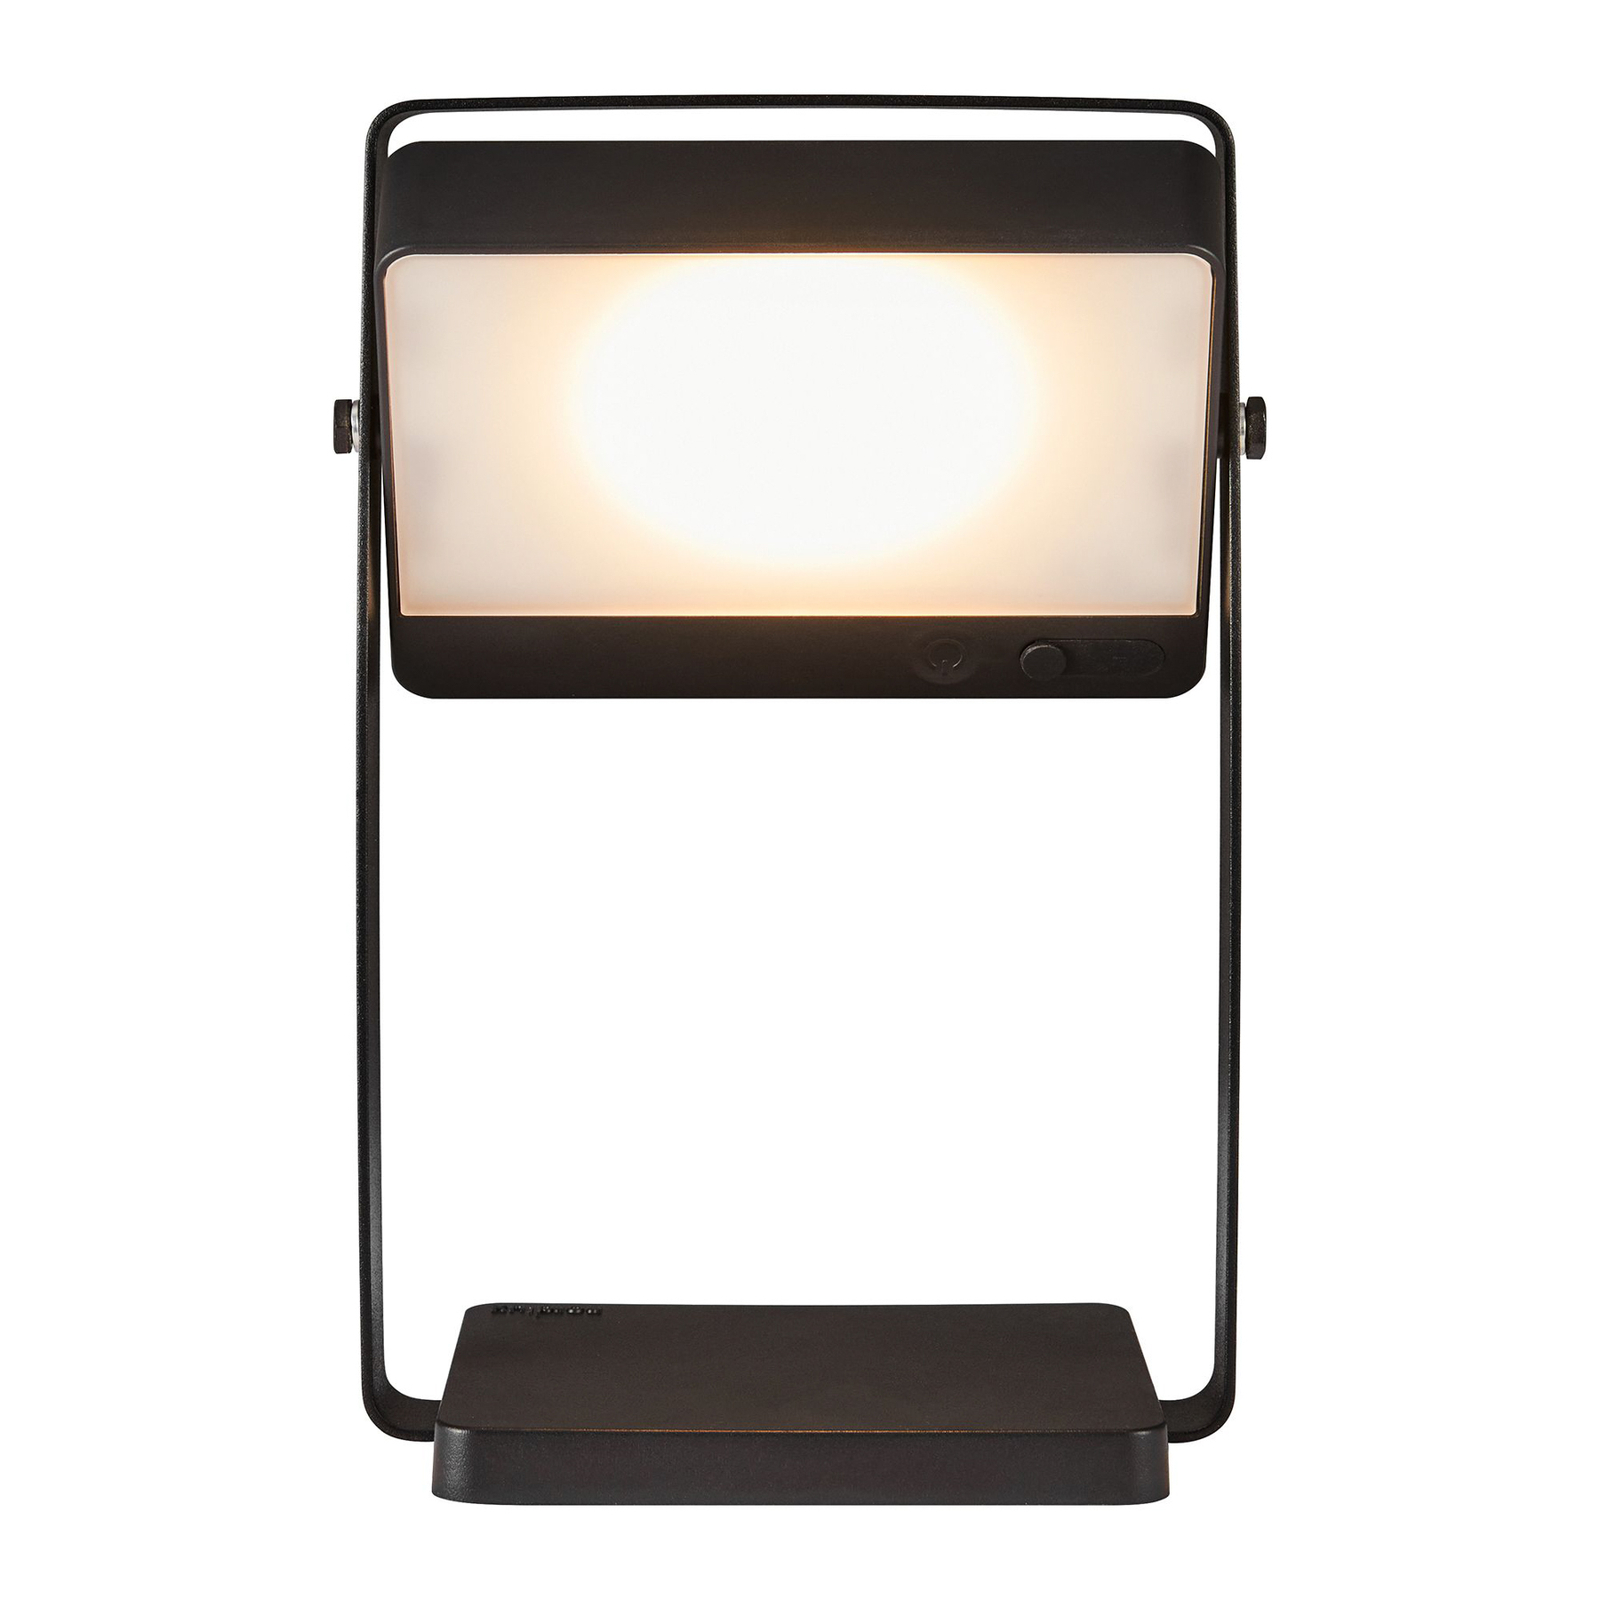 Saulio LED table lamp, black, IP44, aluminium, USB, rechargeable battery